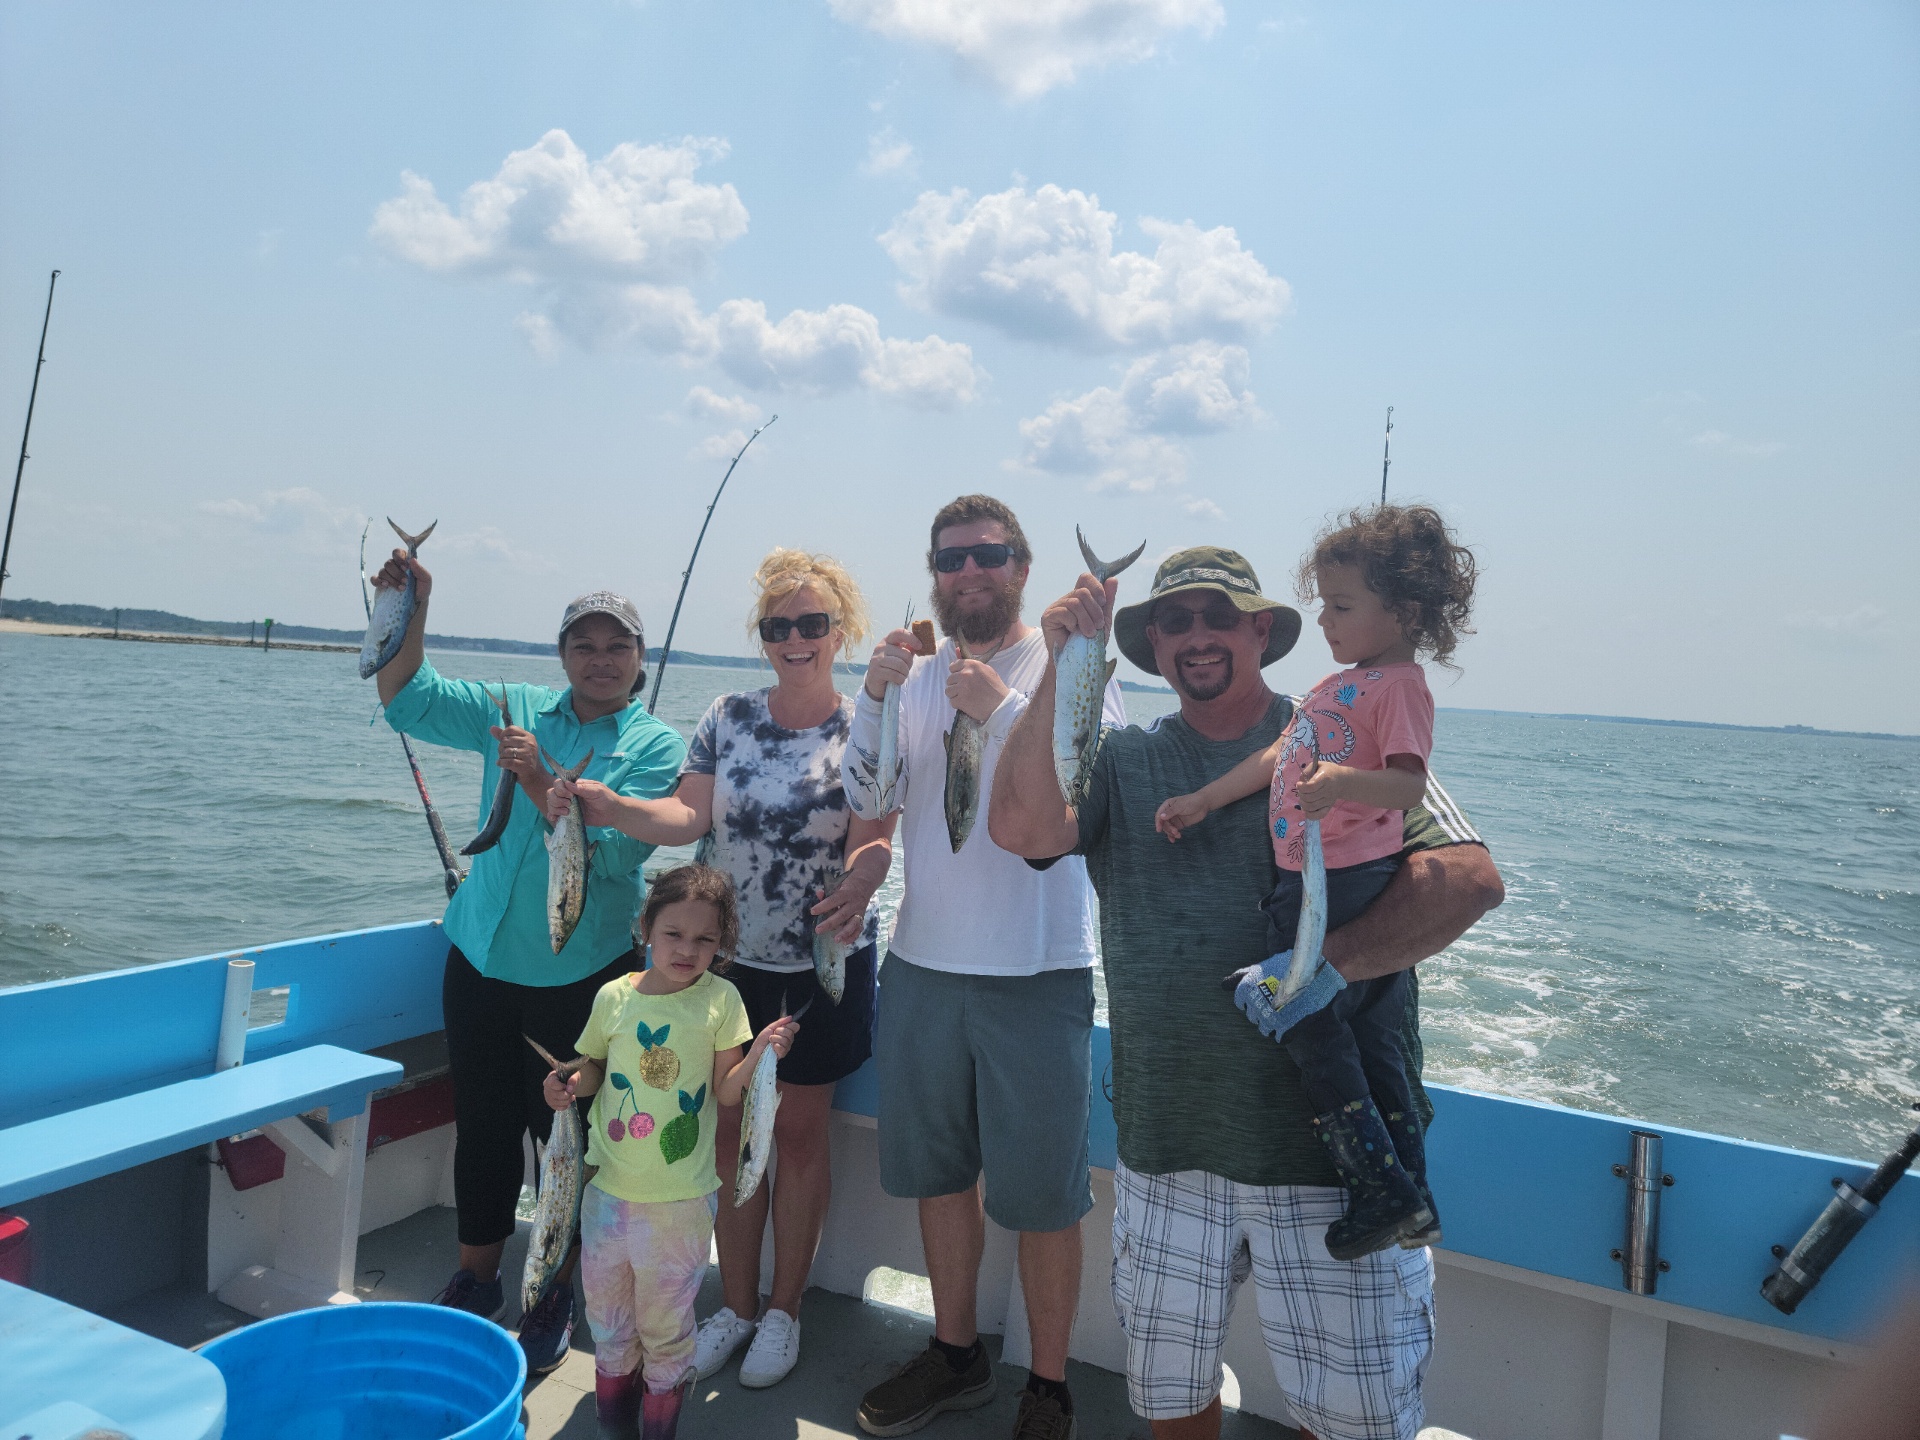 Chesapeake Bay Fishing Reports